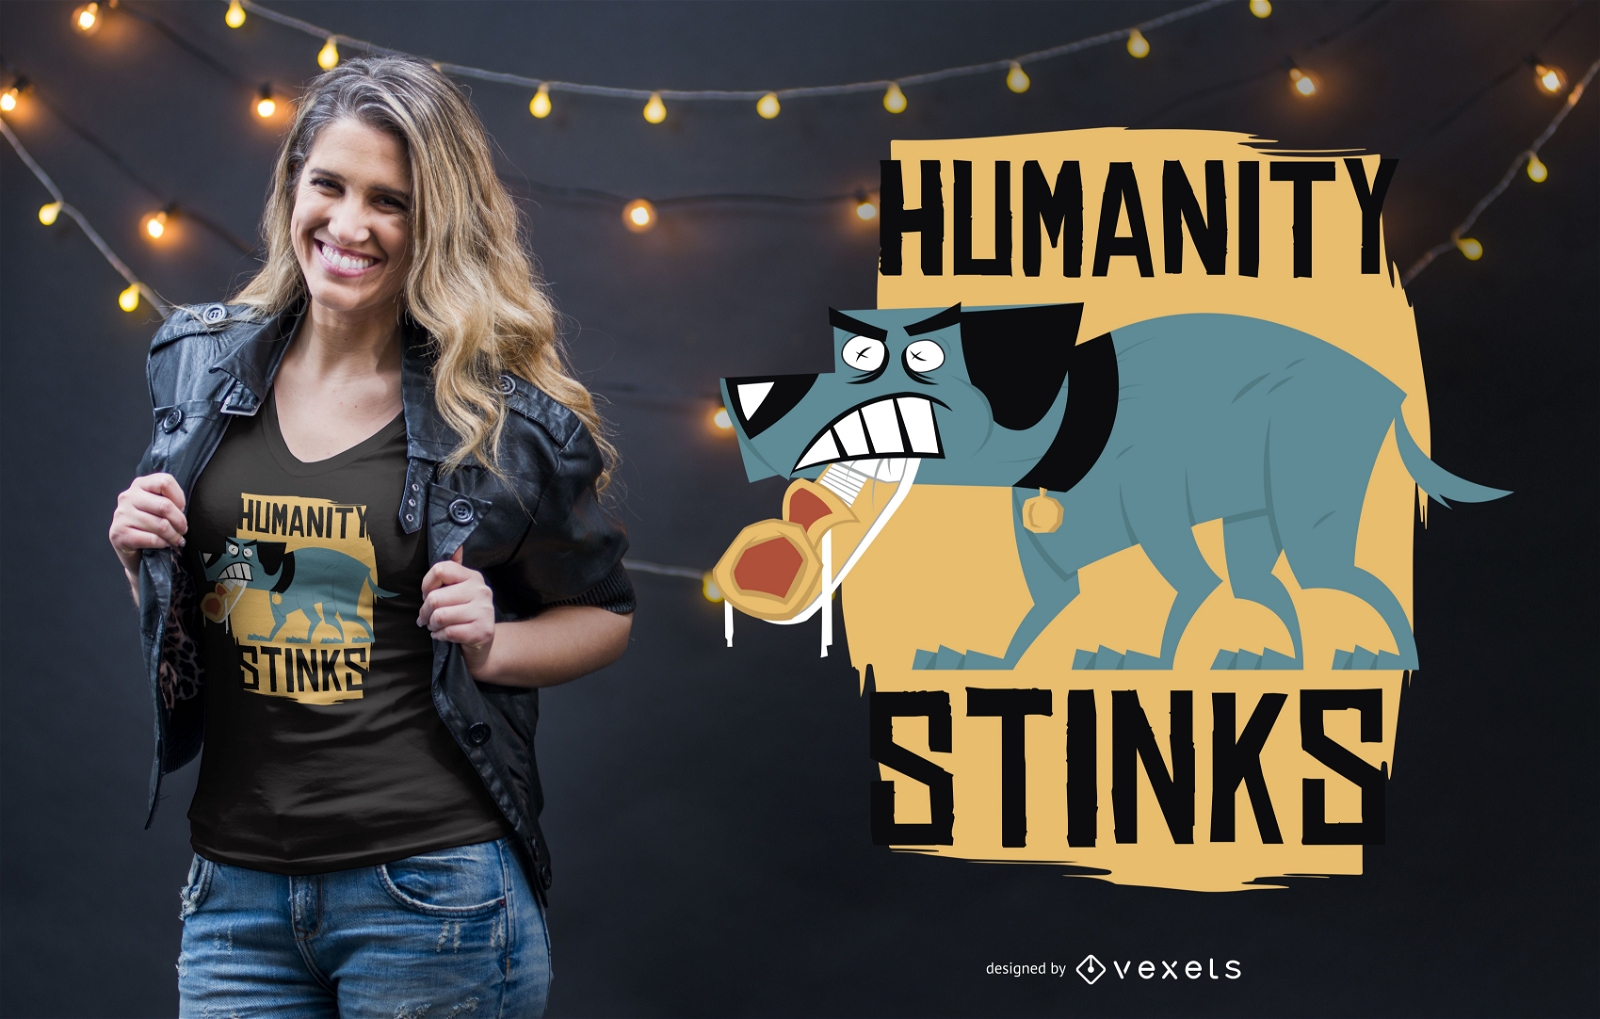 Humanity stinks t-shirt design